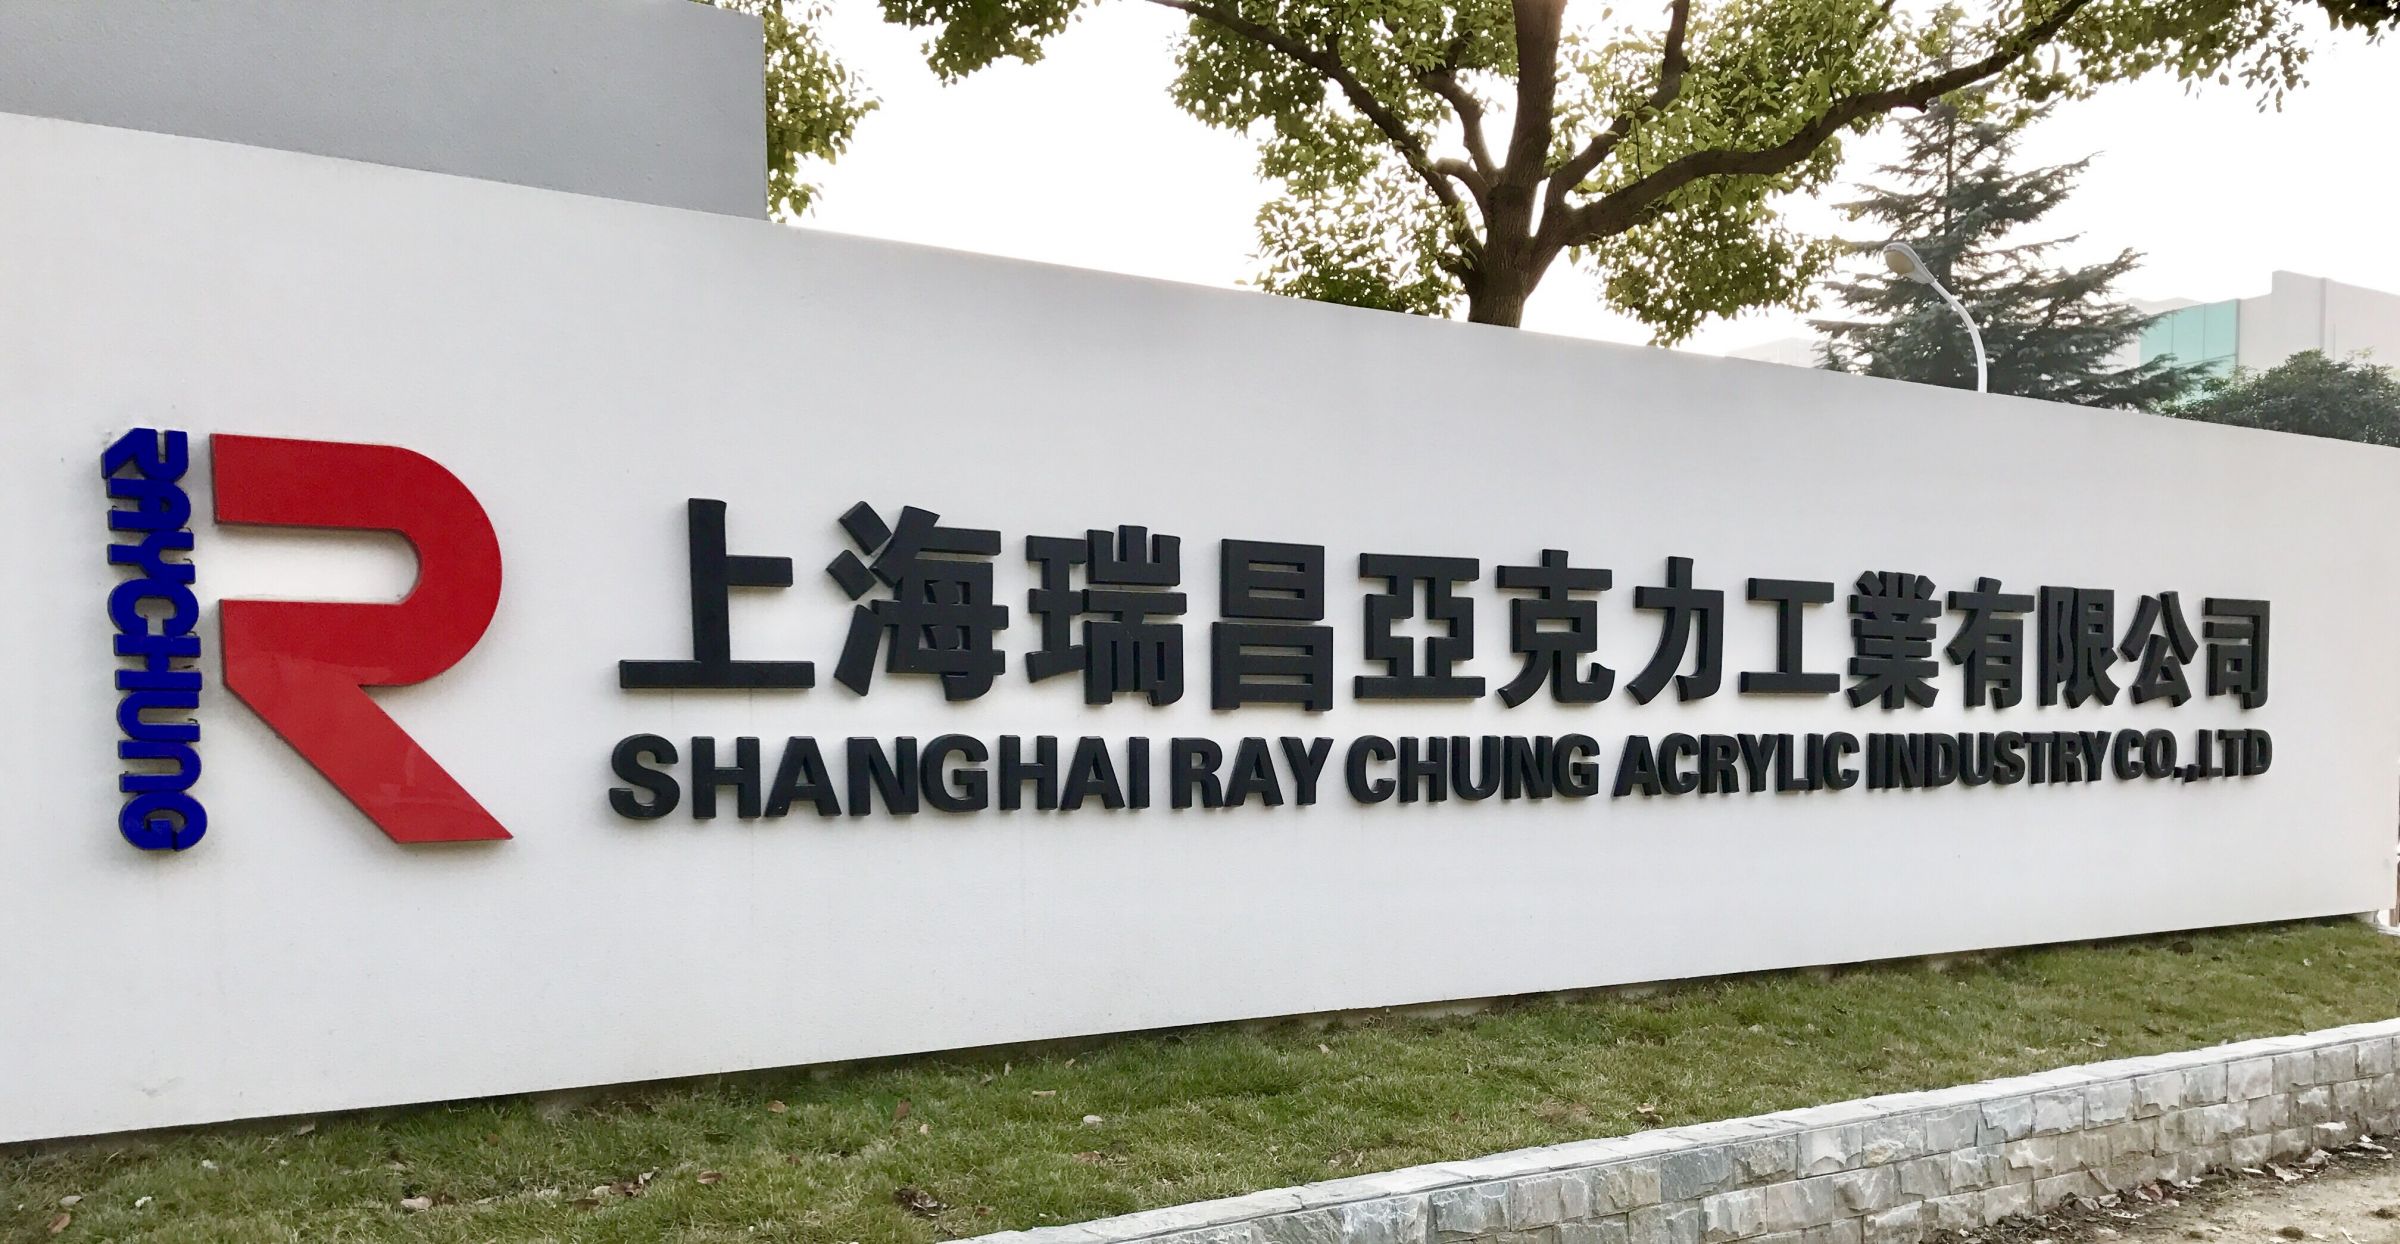 Shanghai Ray Chung Acrylic fasada znak